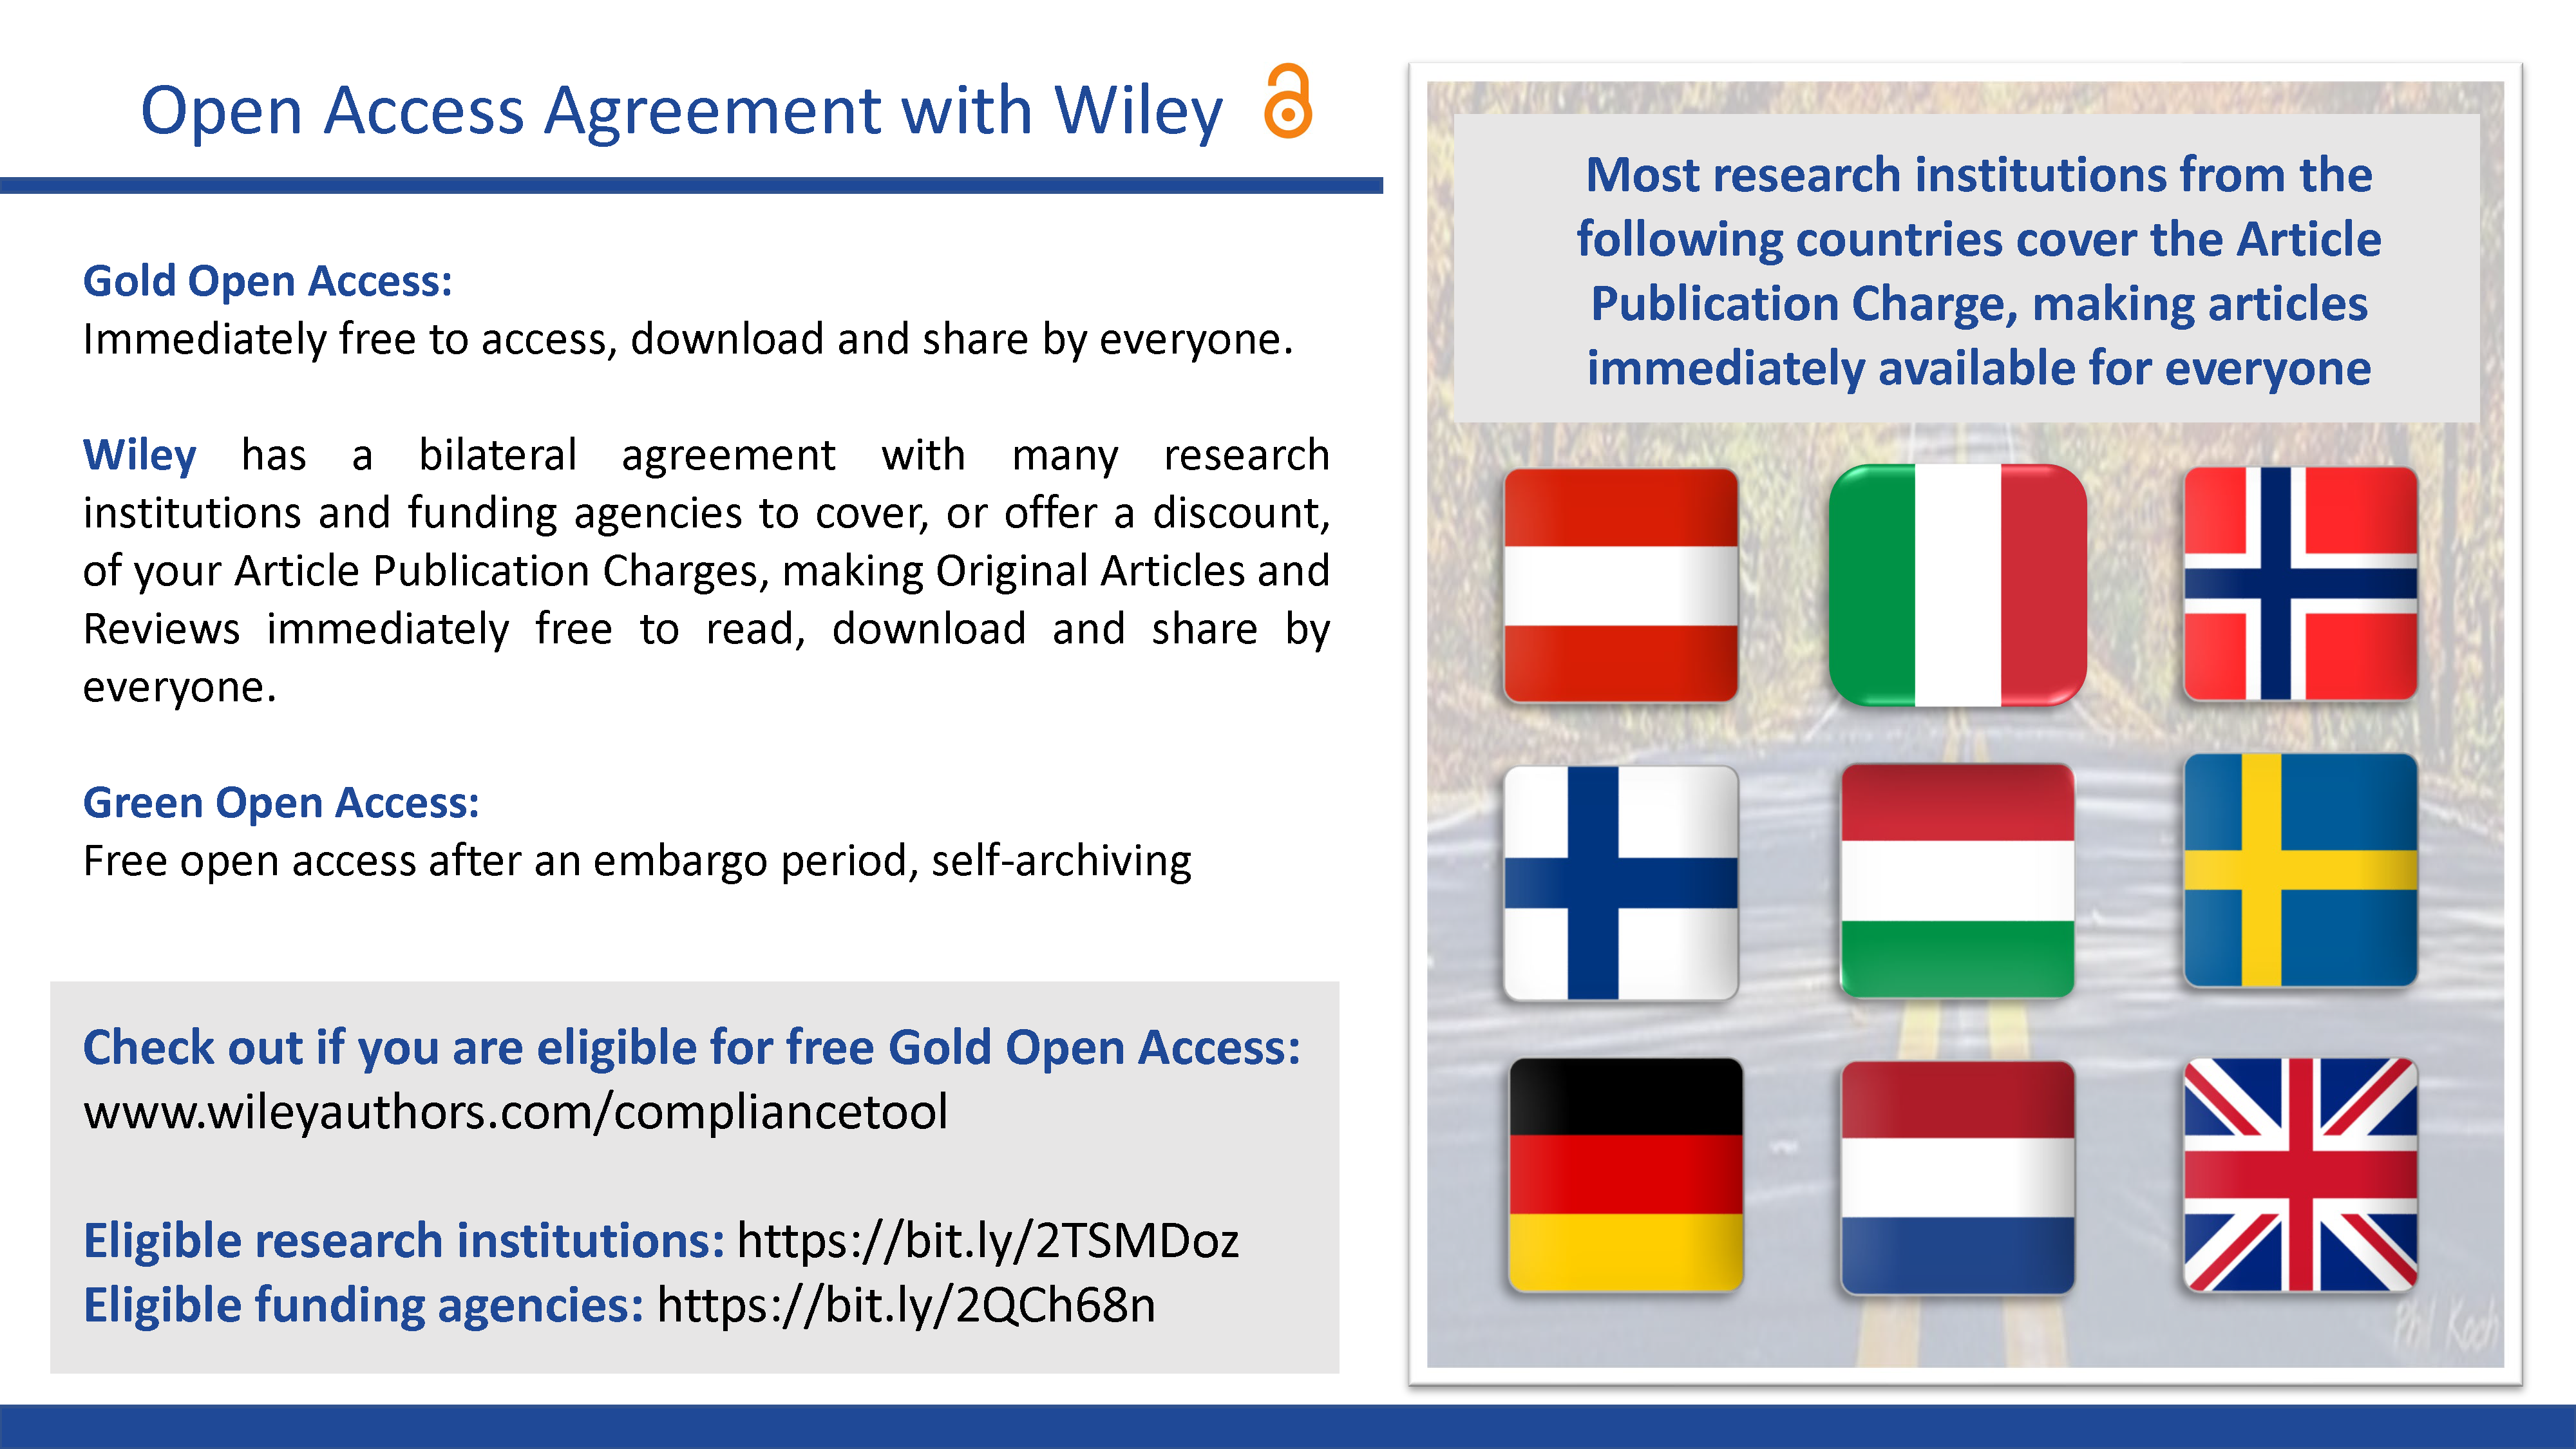 Wiley Open Access Agreement Slide v2